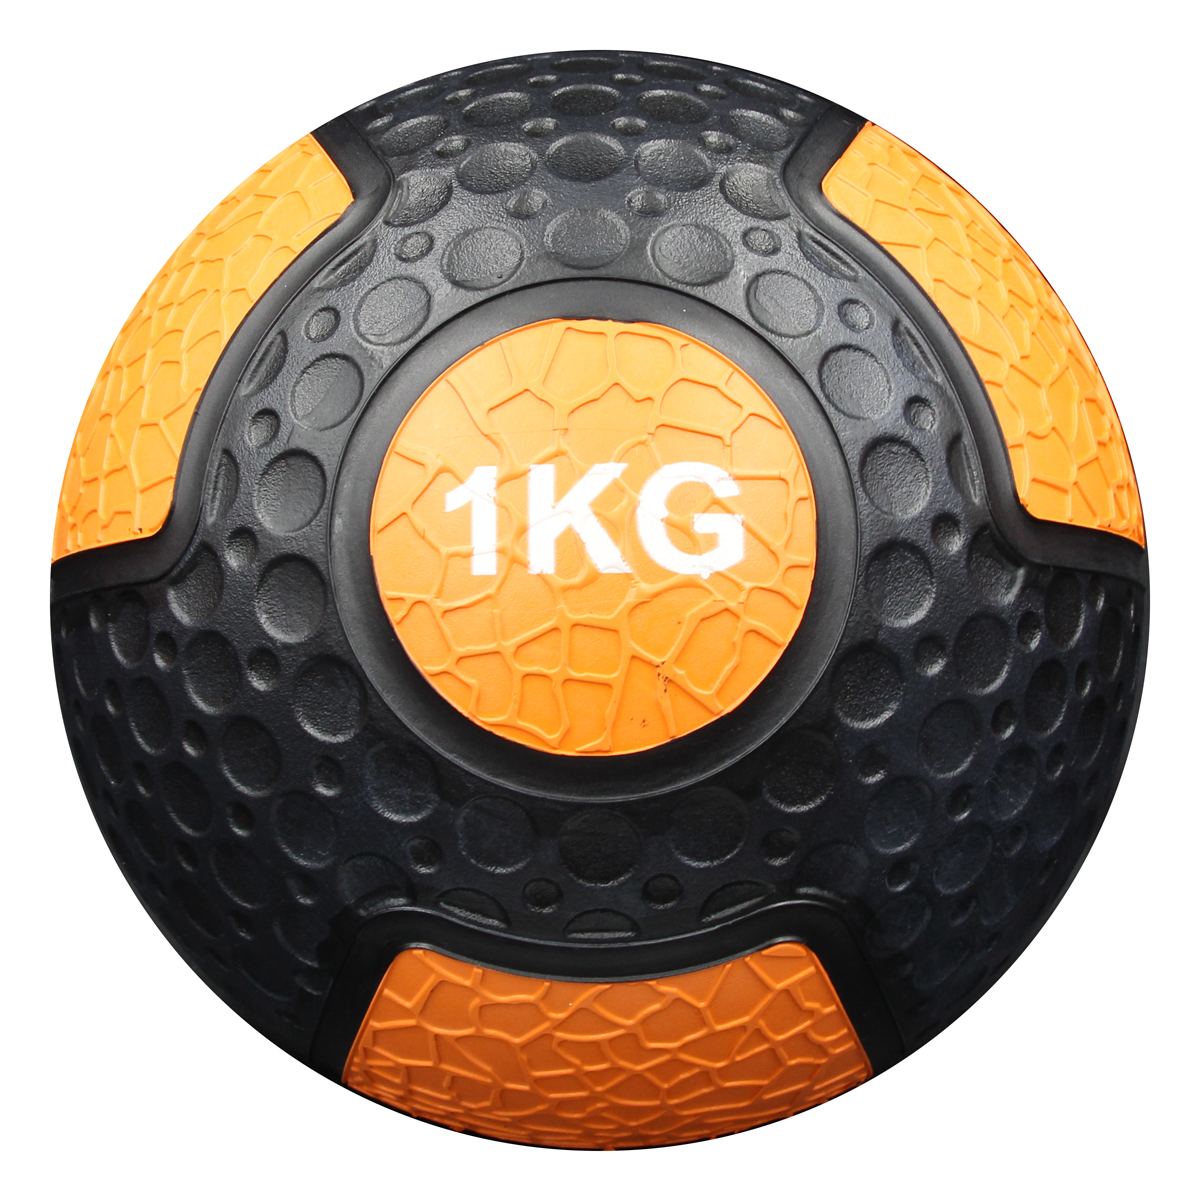 Balón Medicinal De Goma Resistente 1 Kg Gladiatorfit - naranja-negro - 